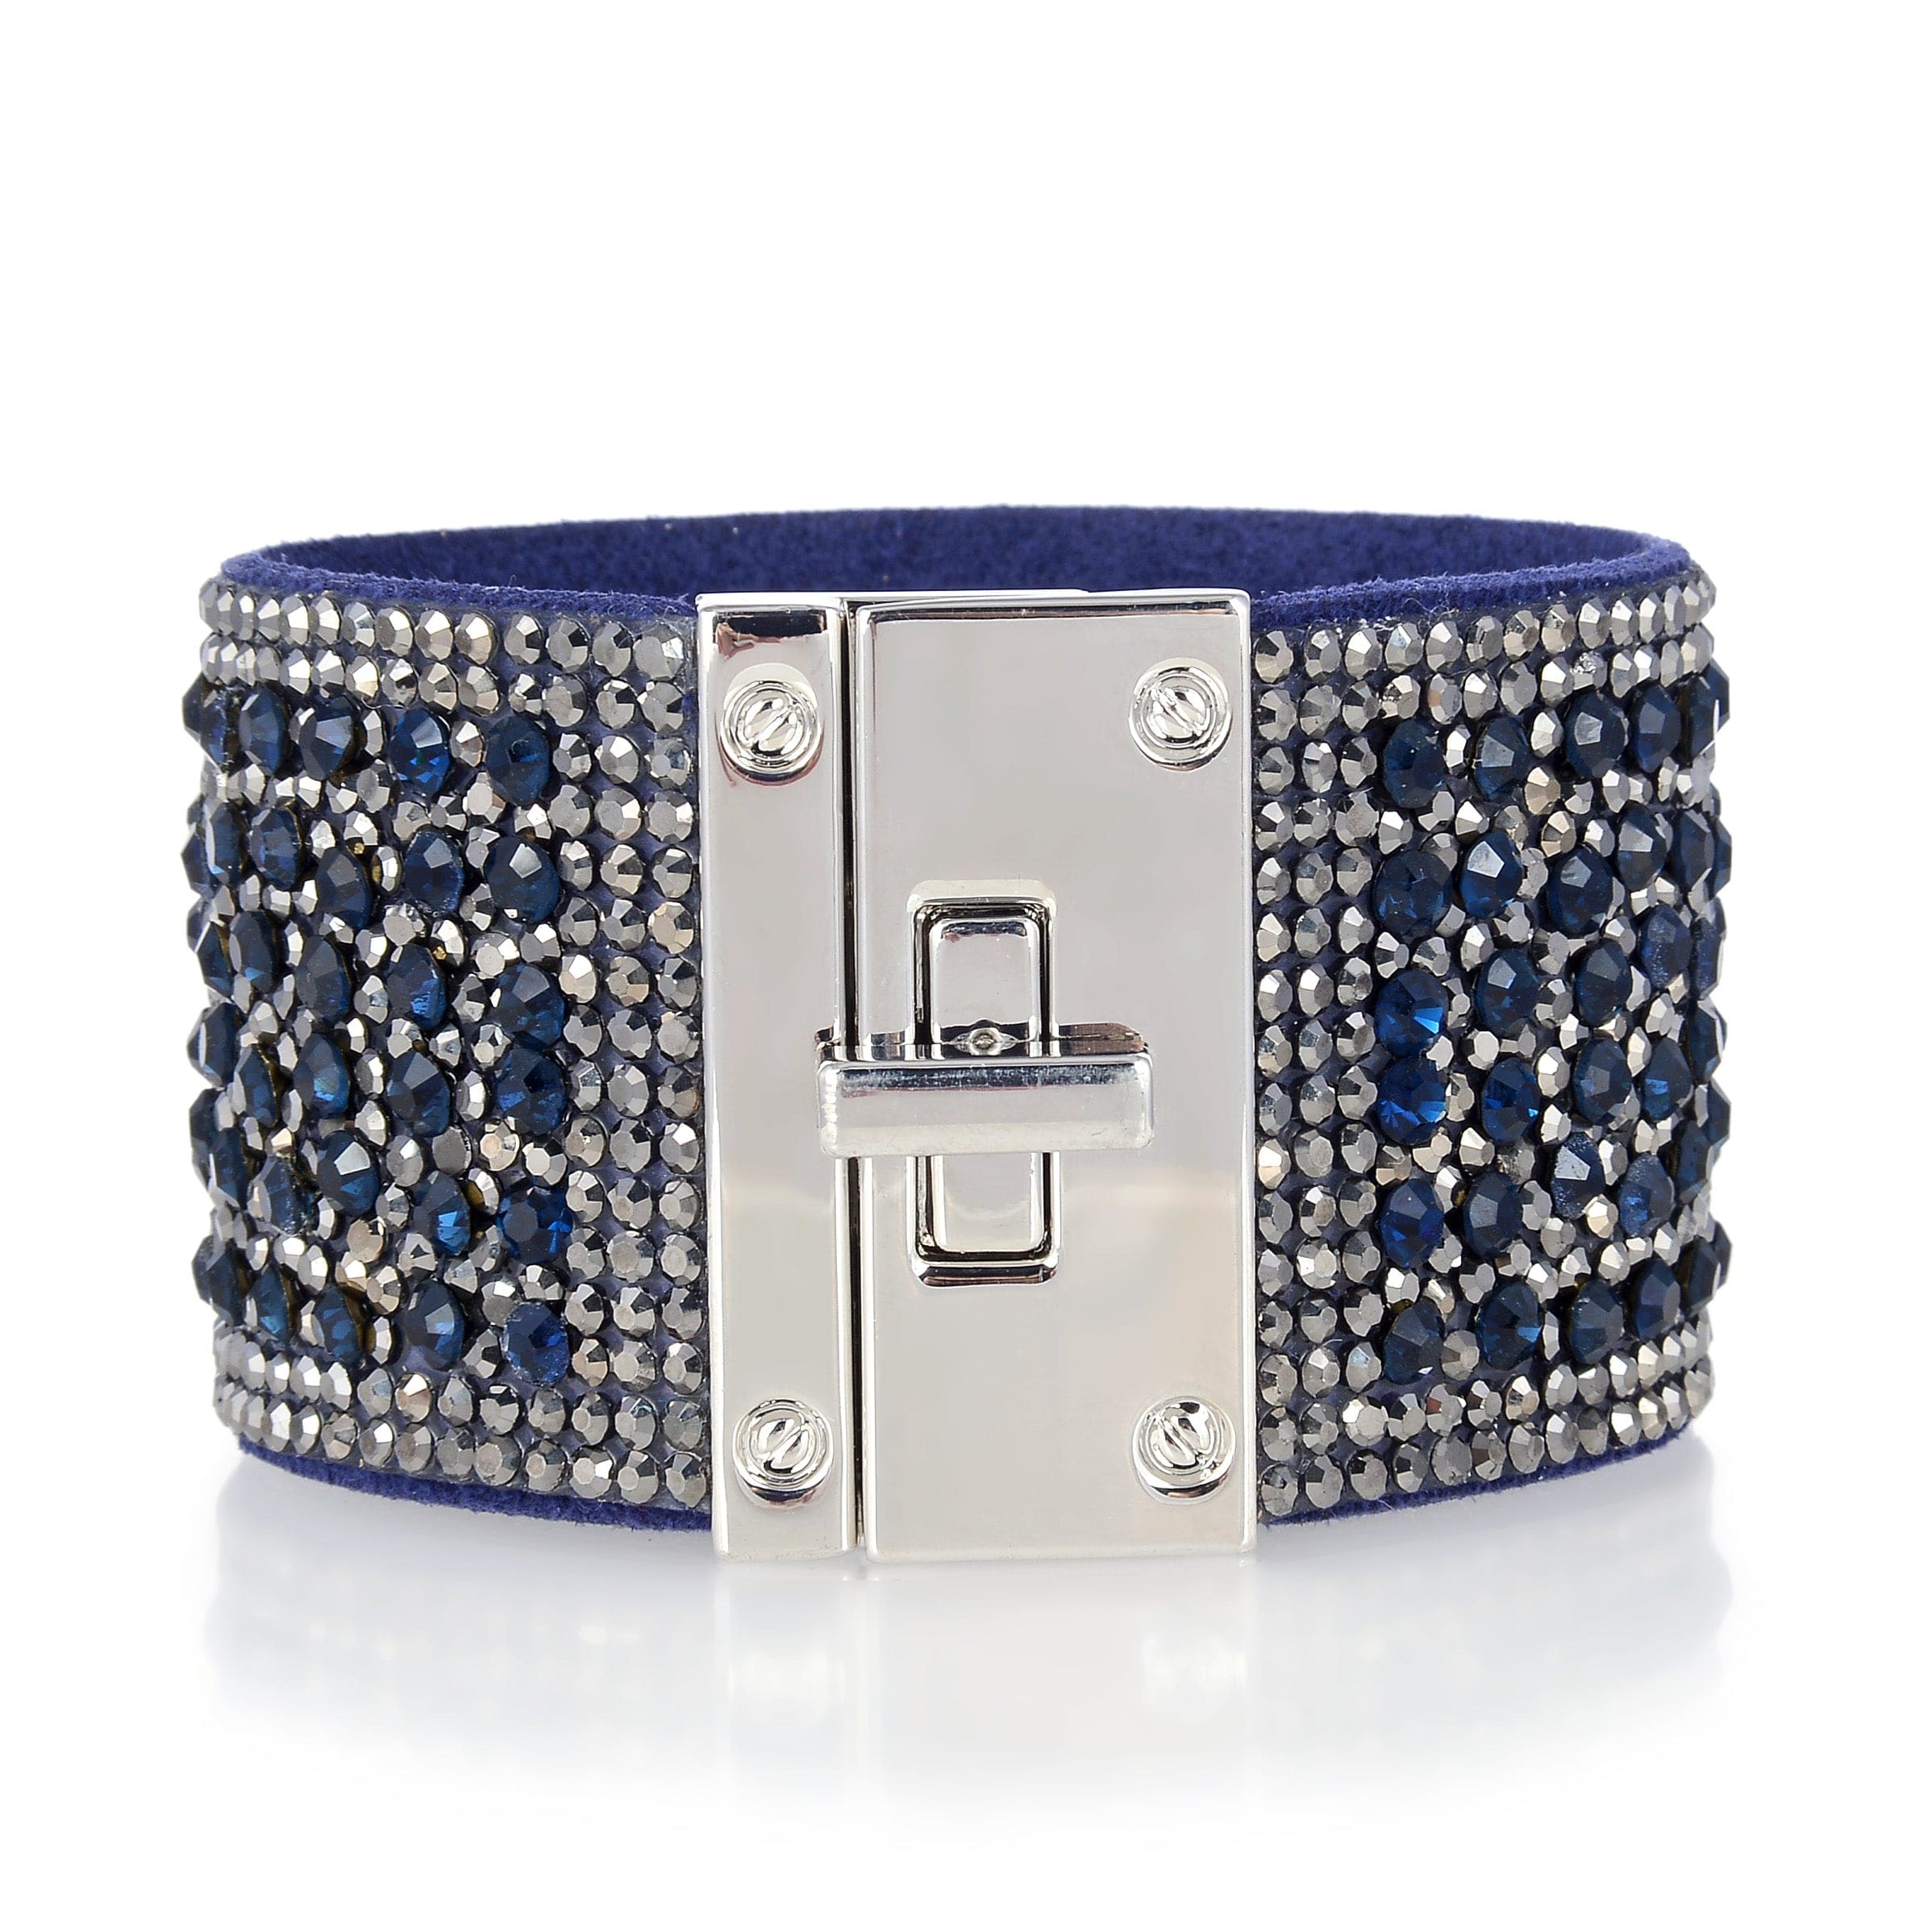 Kalifano Multiwrap Bracelets Swarovski Crystal Leather Band Bracelet Navy Blue with Toggle Lock BMW-17-NY